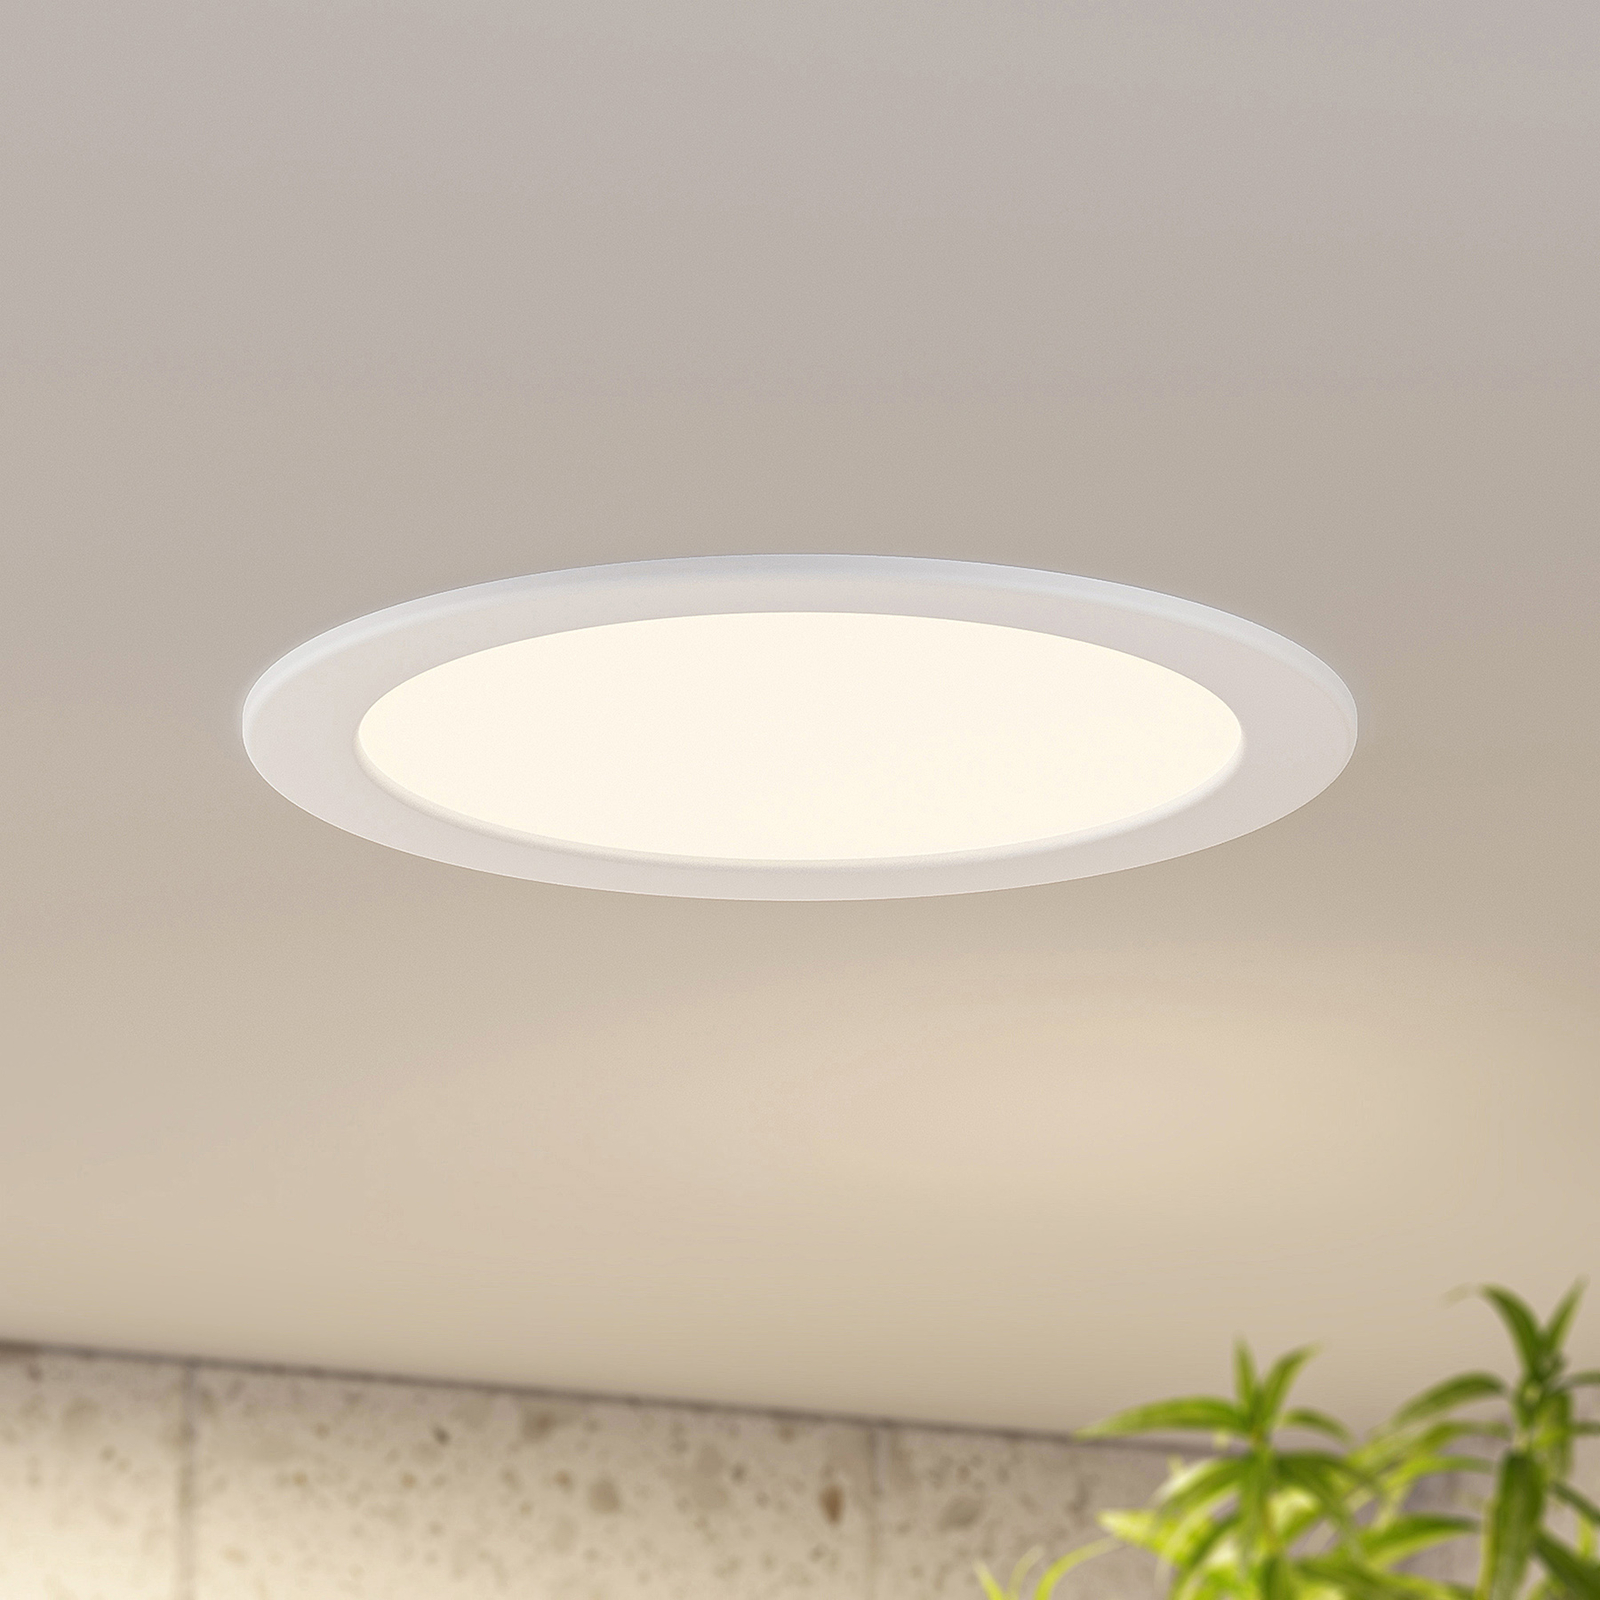 Prios LED лампа за вграждане Cadance, бяла, 24 cm, комплект от 3 броя, с